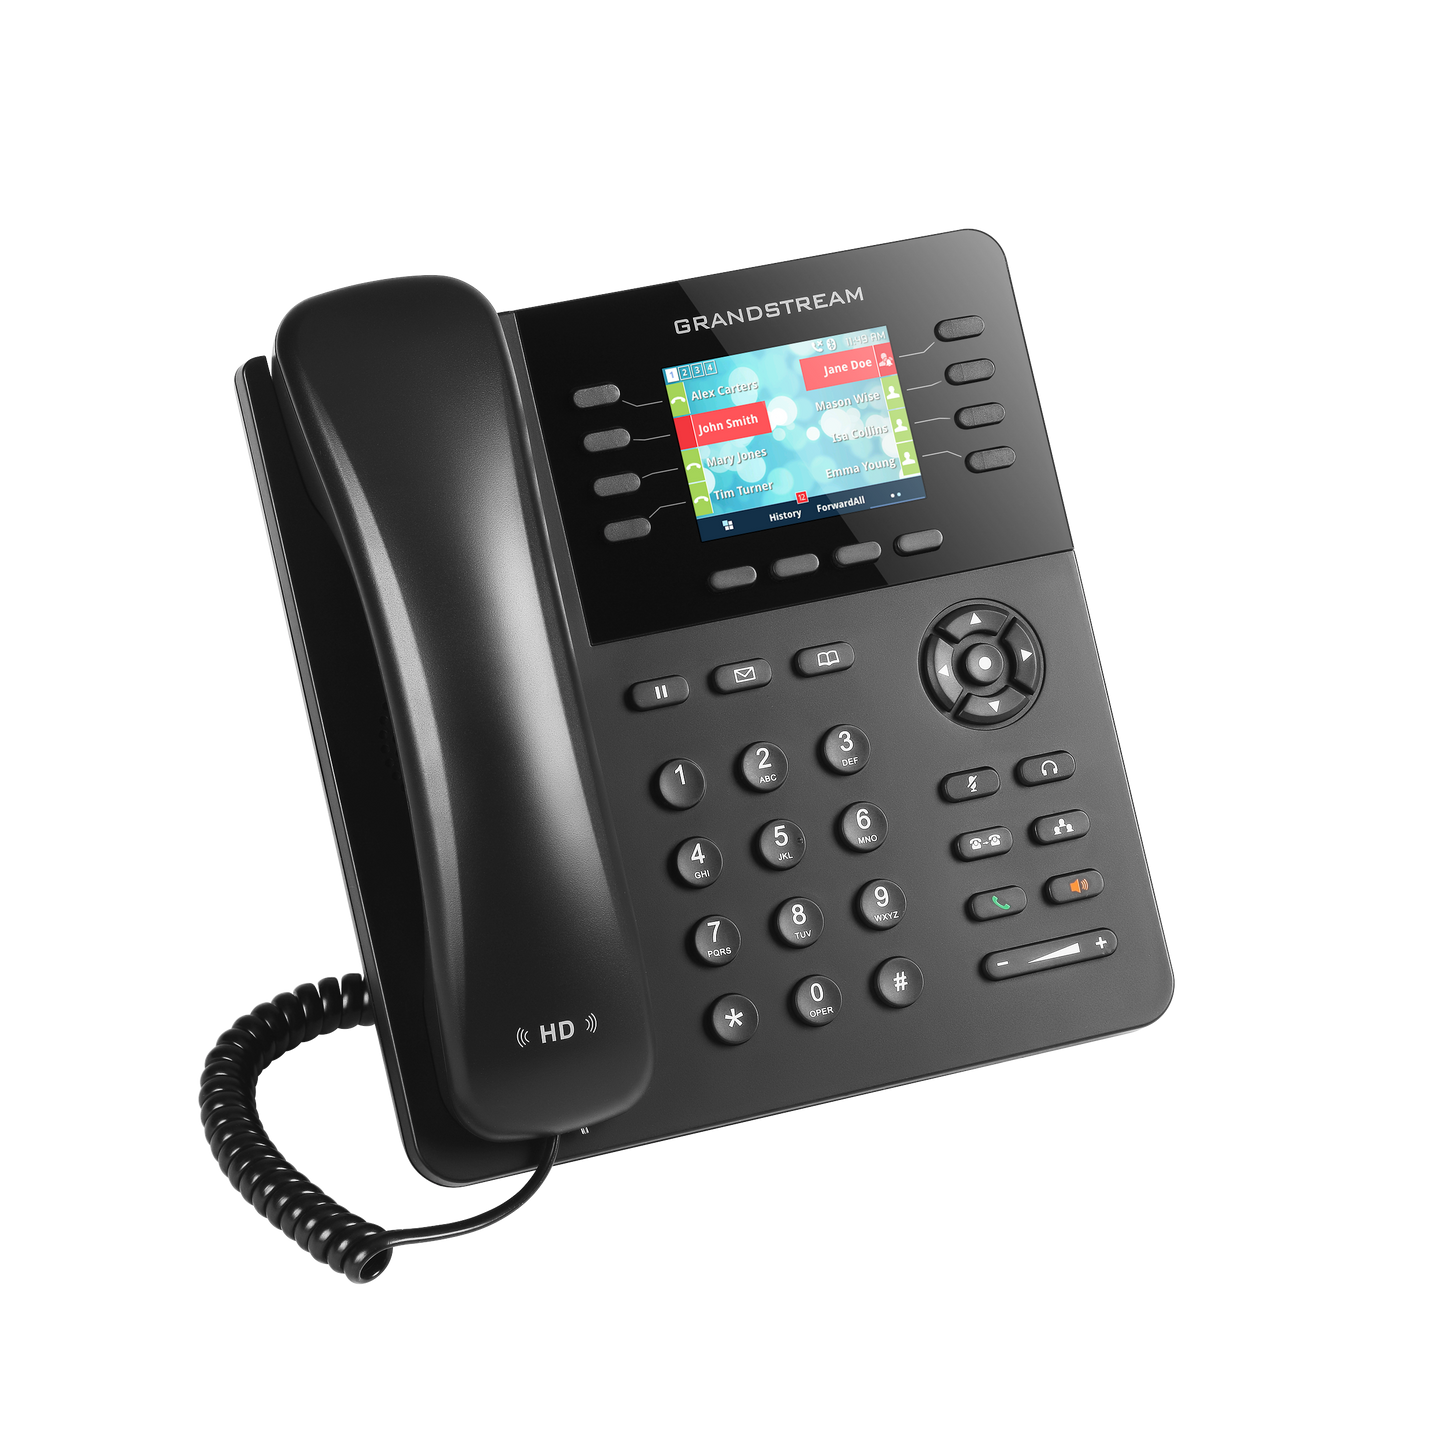 Grandstream GXP2135 8-Line IP Phone